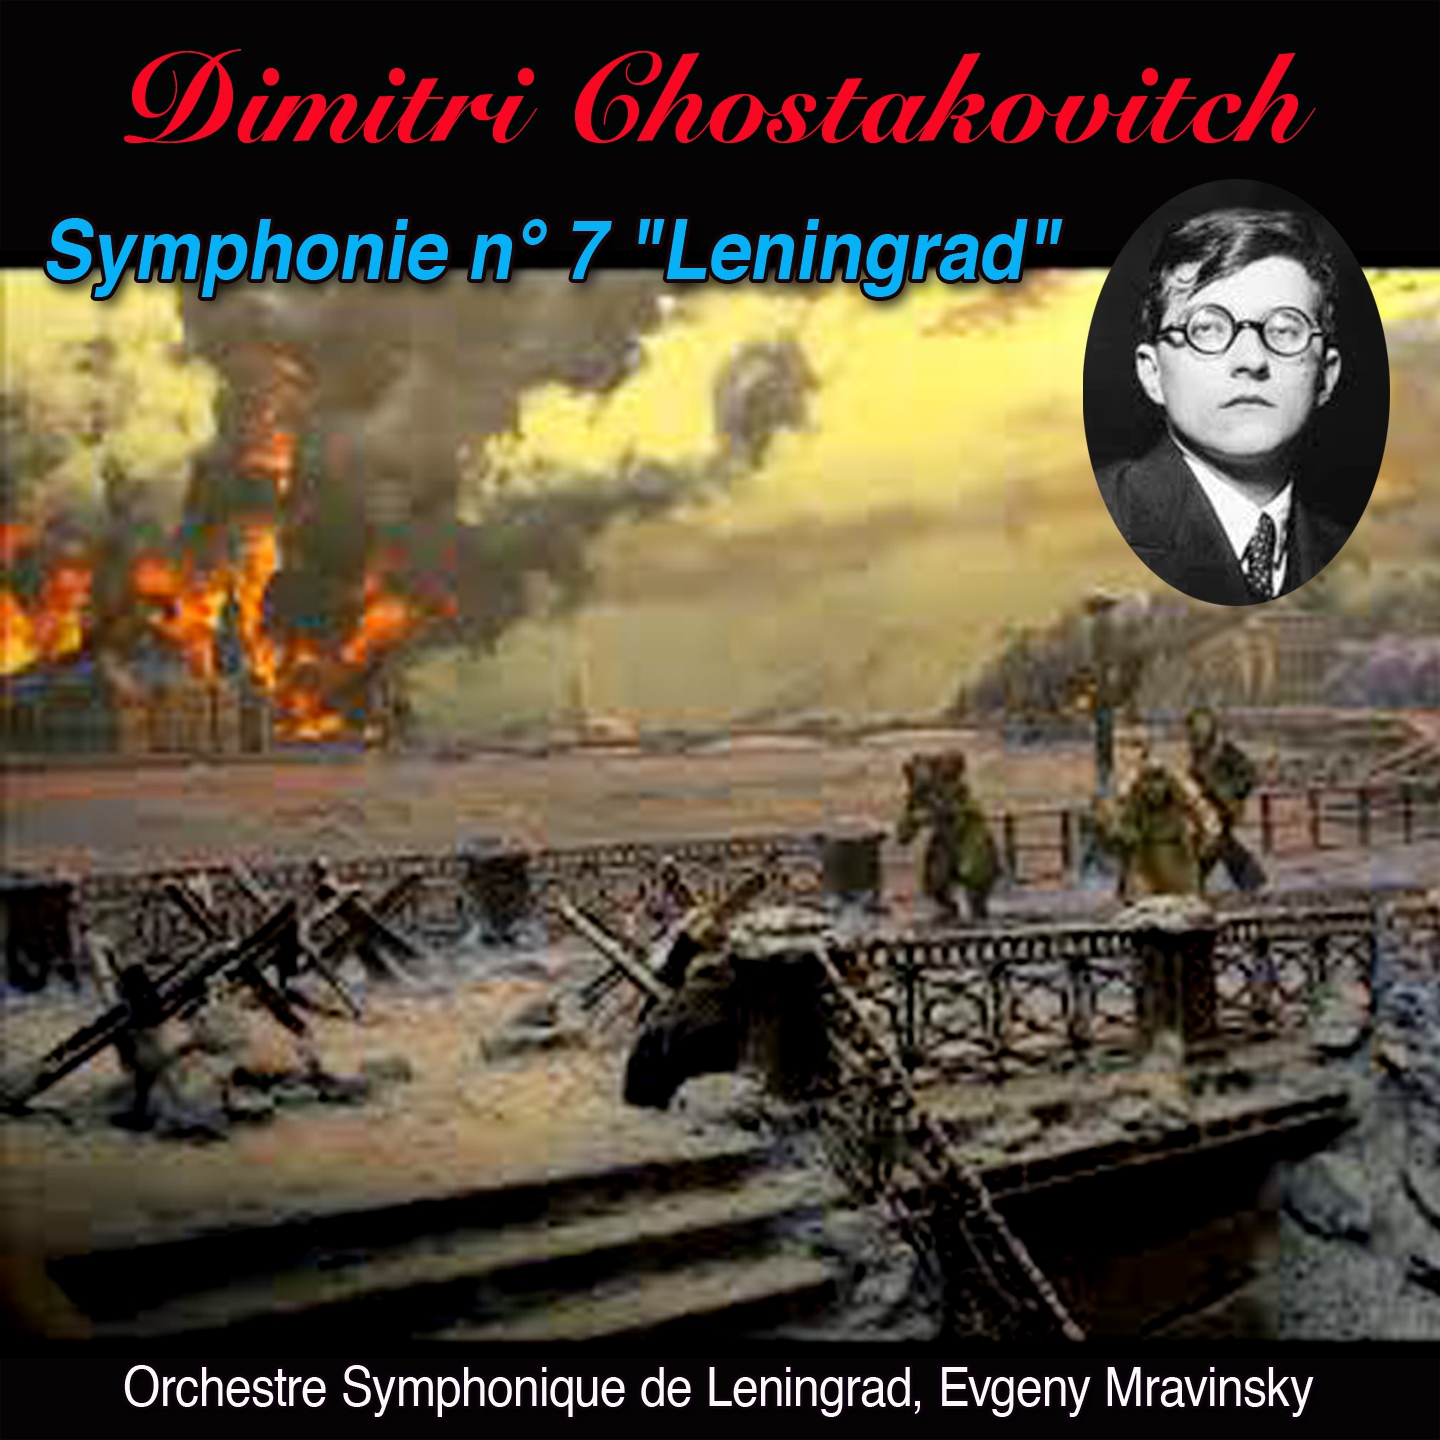 Dimitri chostakovitch, symphonie n° 7 "Leningrad"